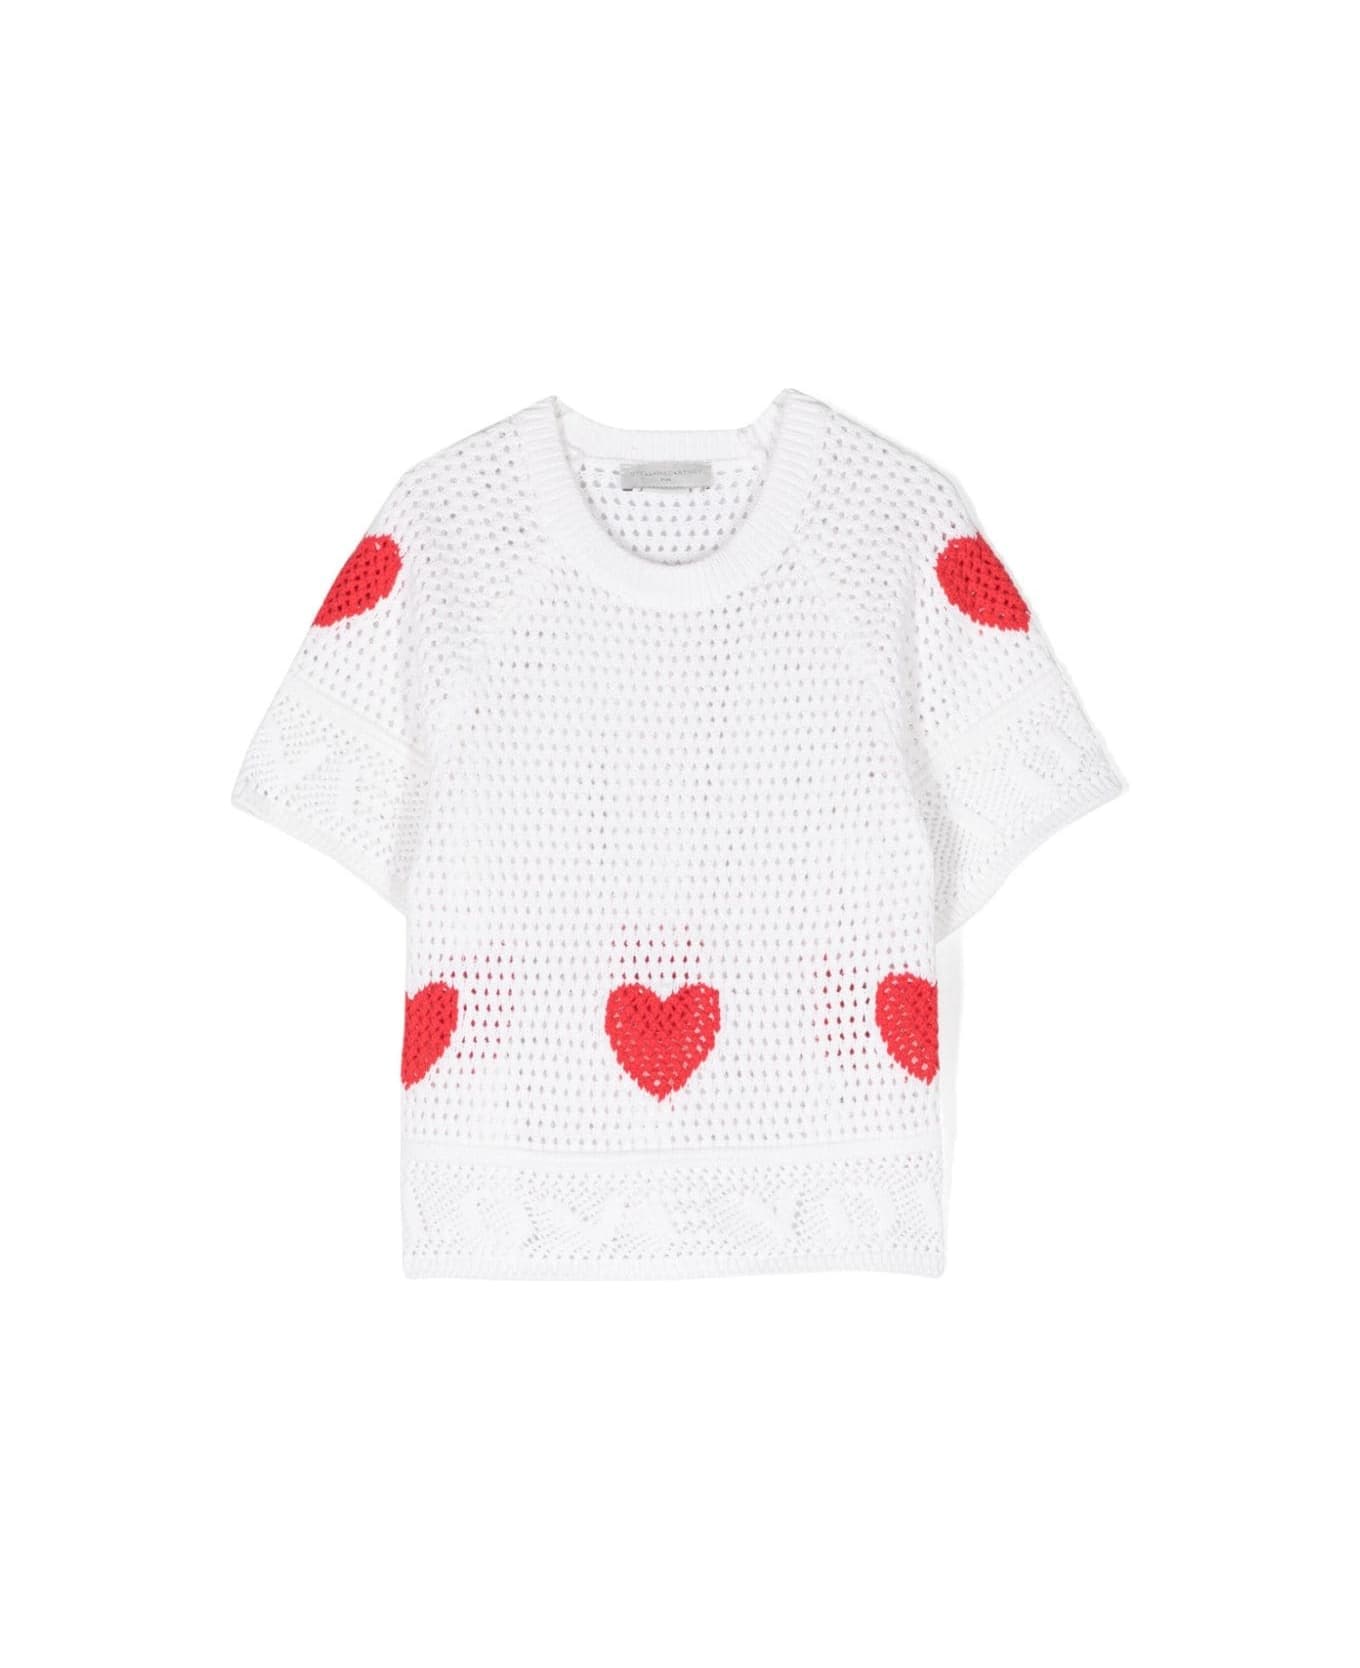 Stella McCartney Kids White Crochet T-shirt With Red Hearts - White